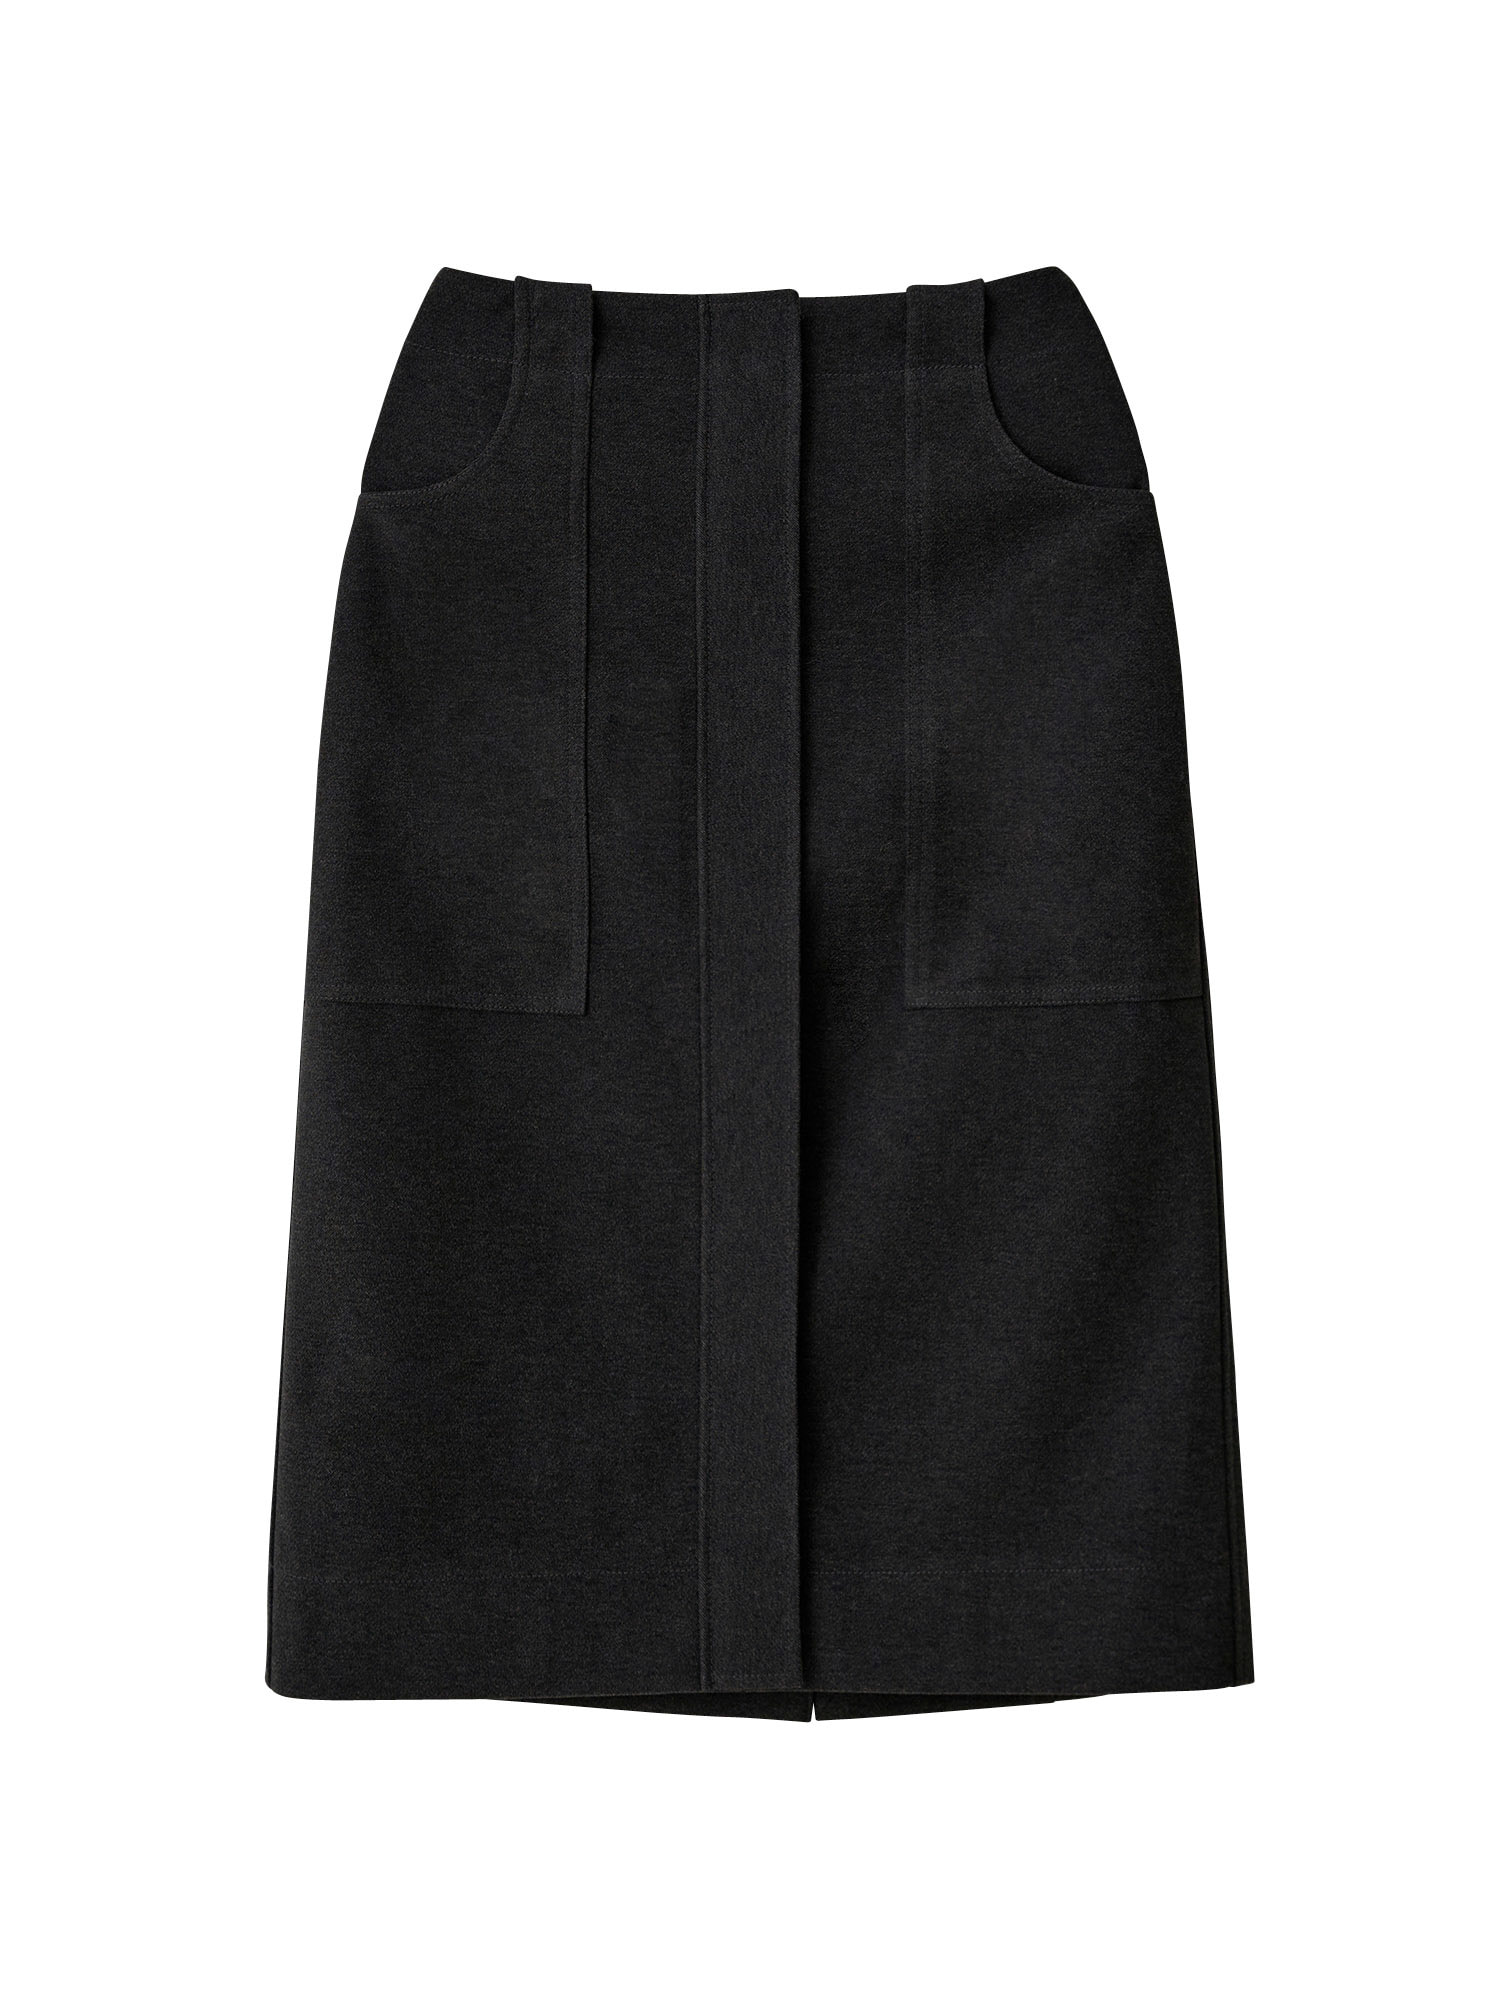 Wool Fatigue Skirt - Charcoal